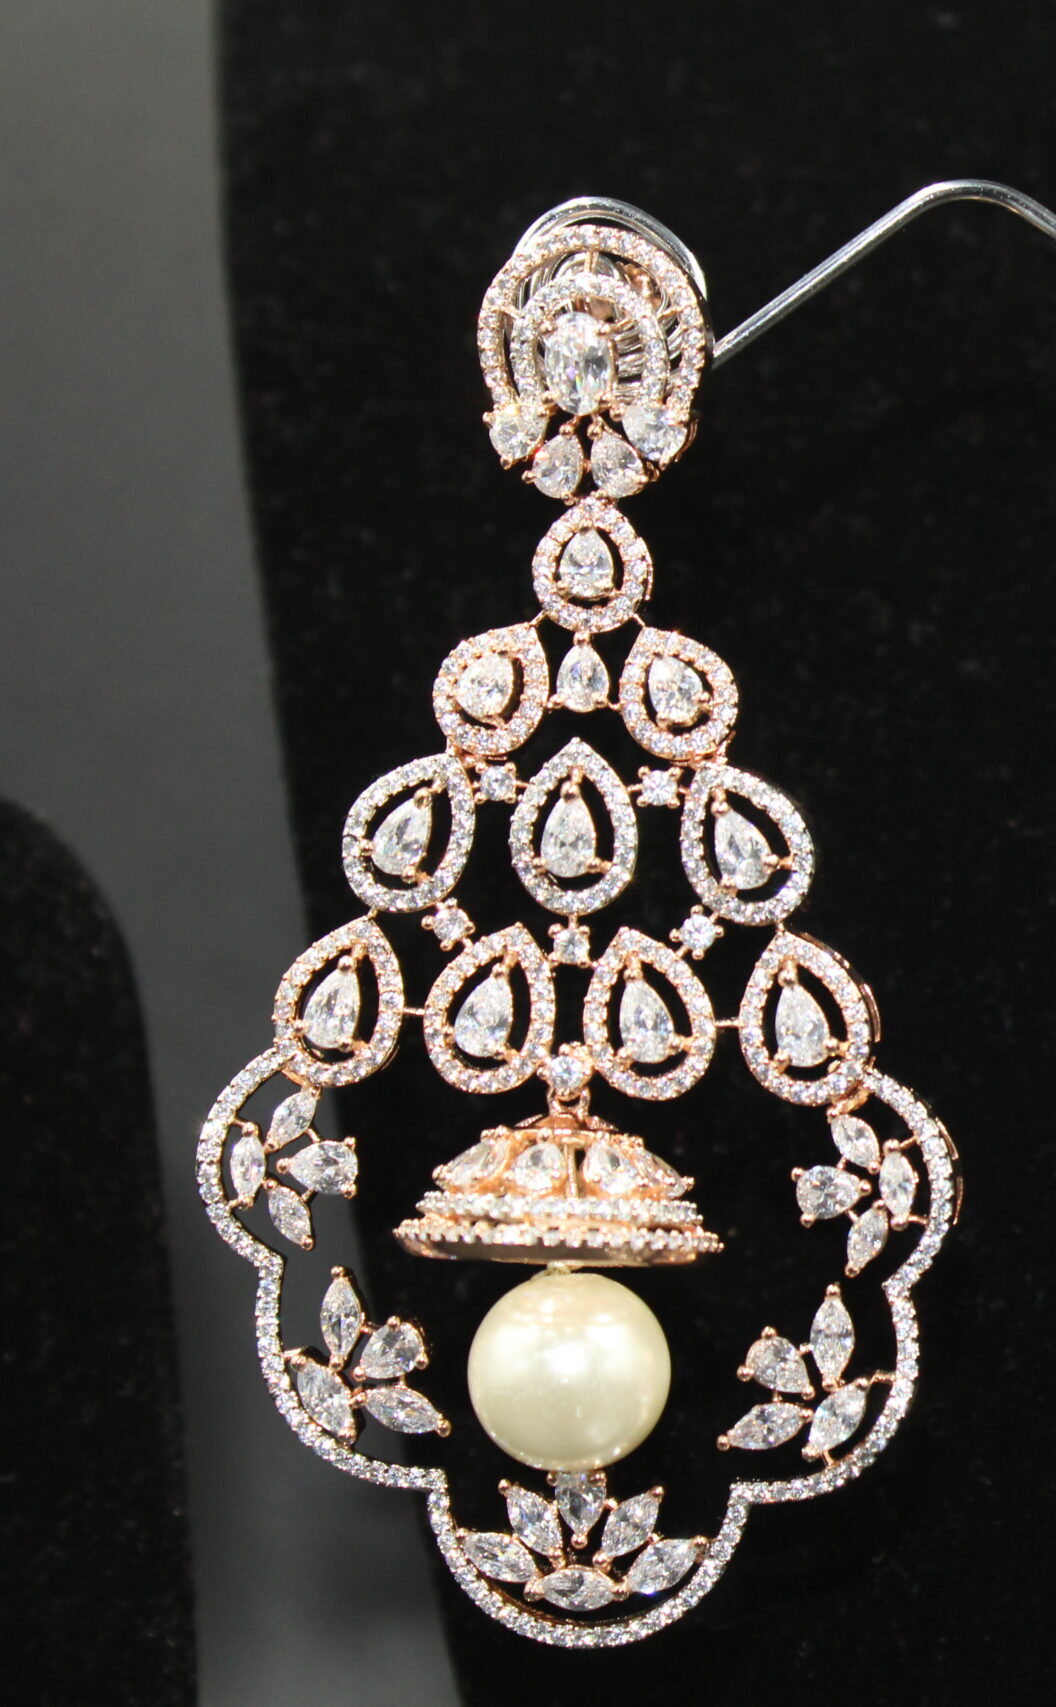 Marisa bell hanging designer American Diamond earrings